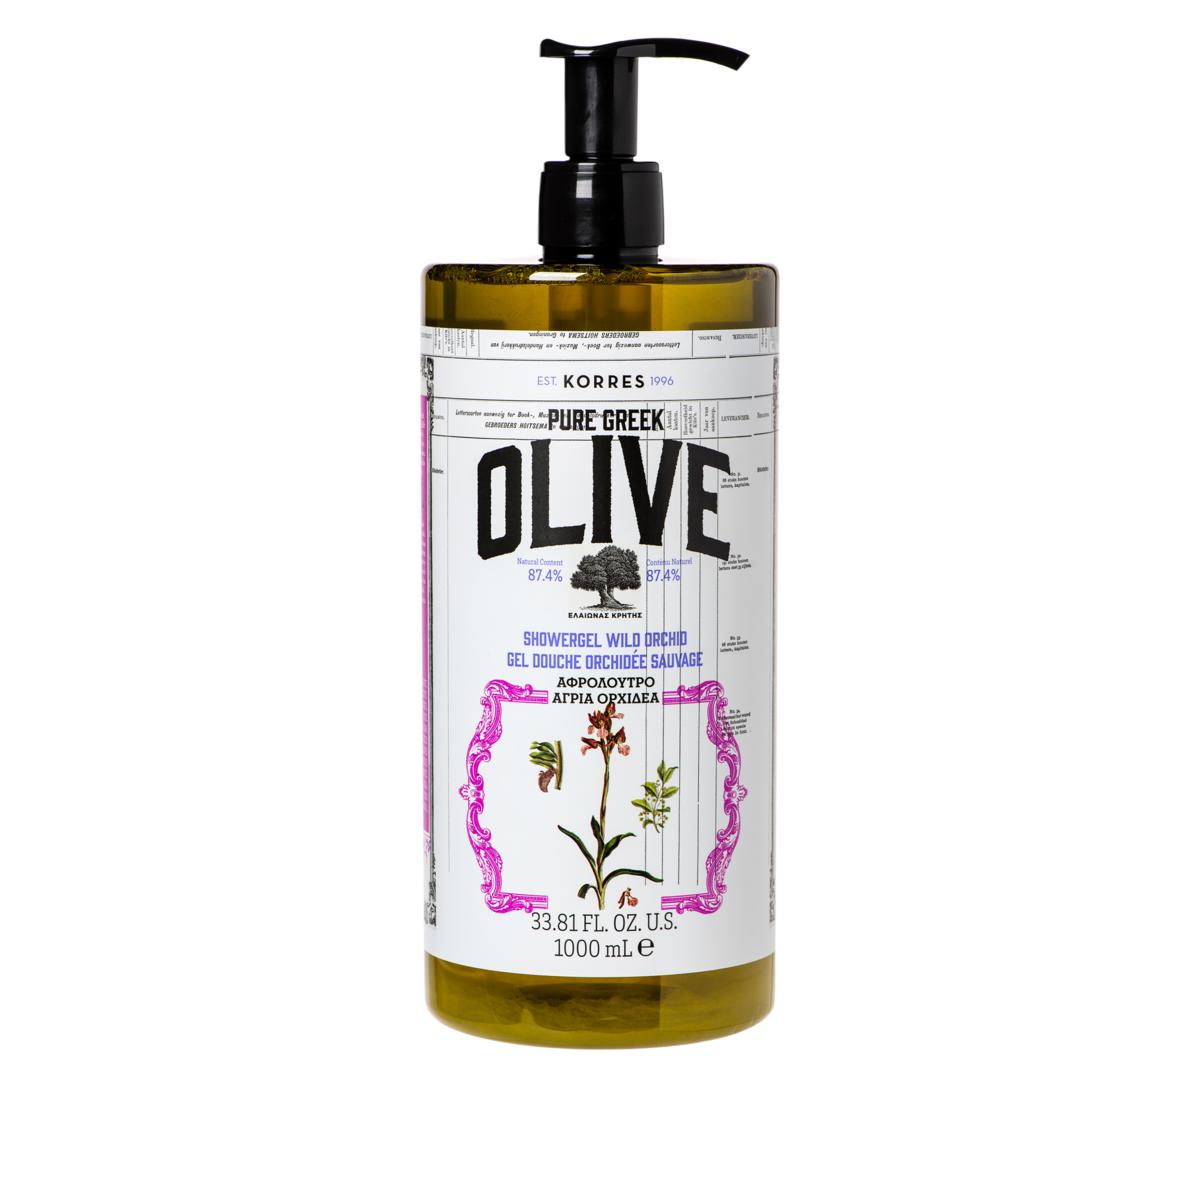 a bottle of korres olive oil shower gel, a streamlined beauty product